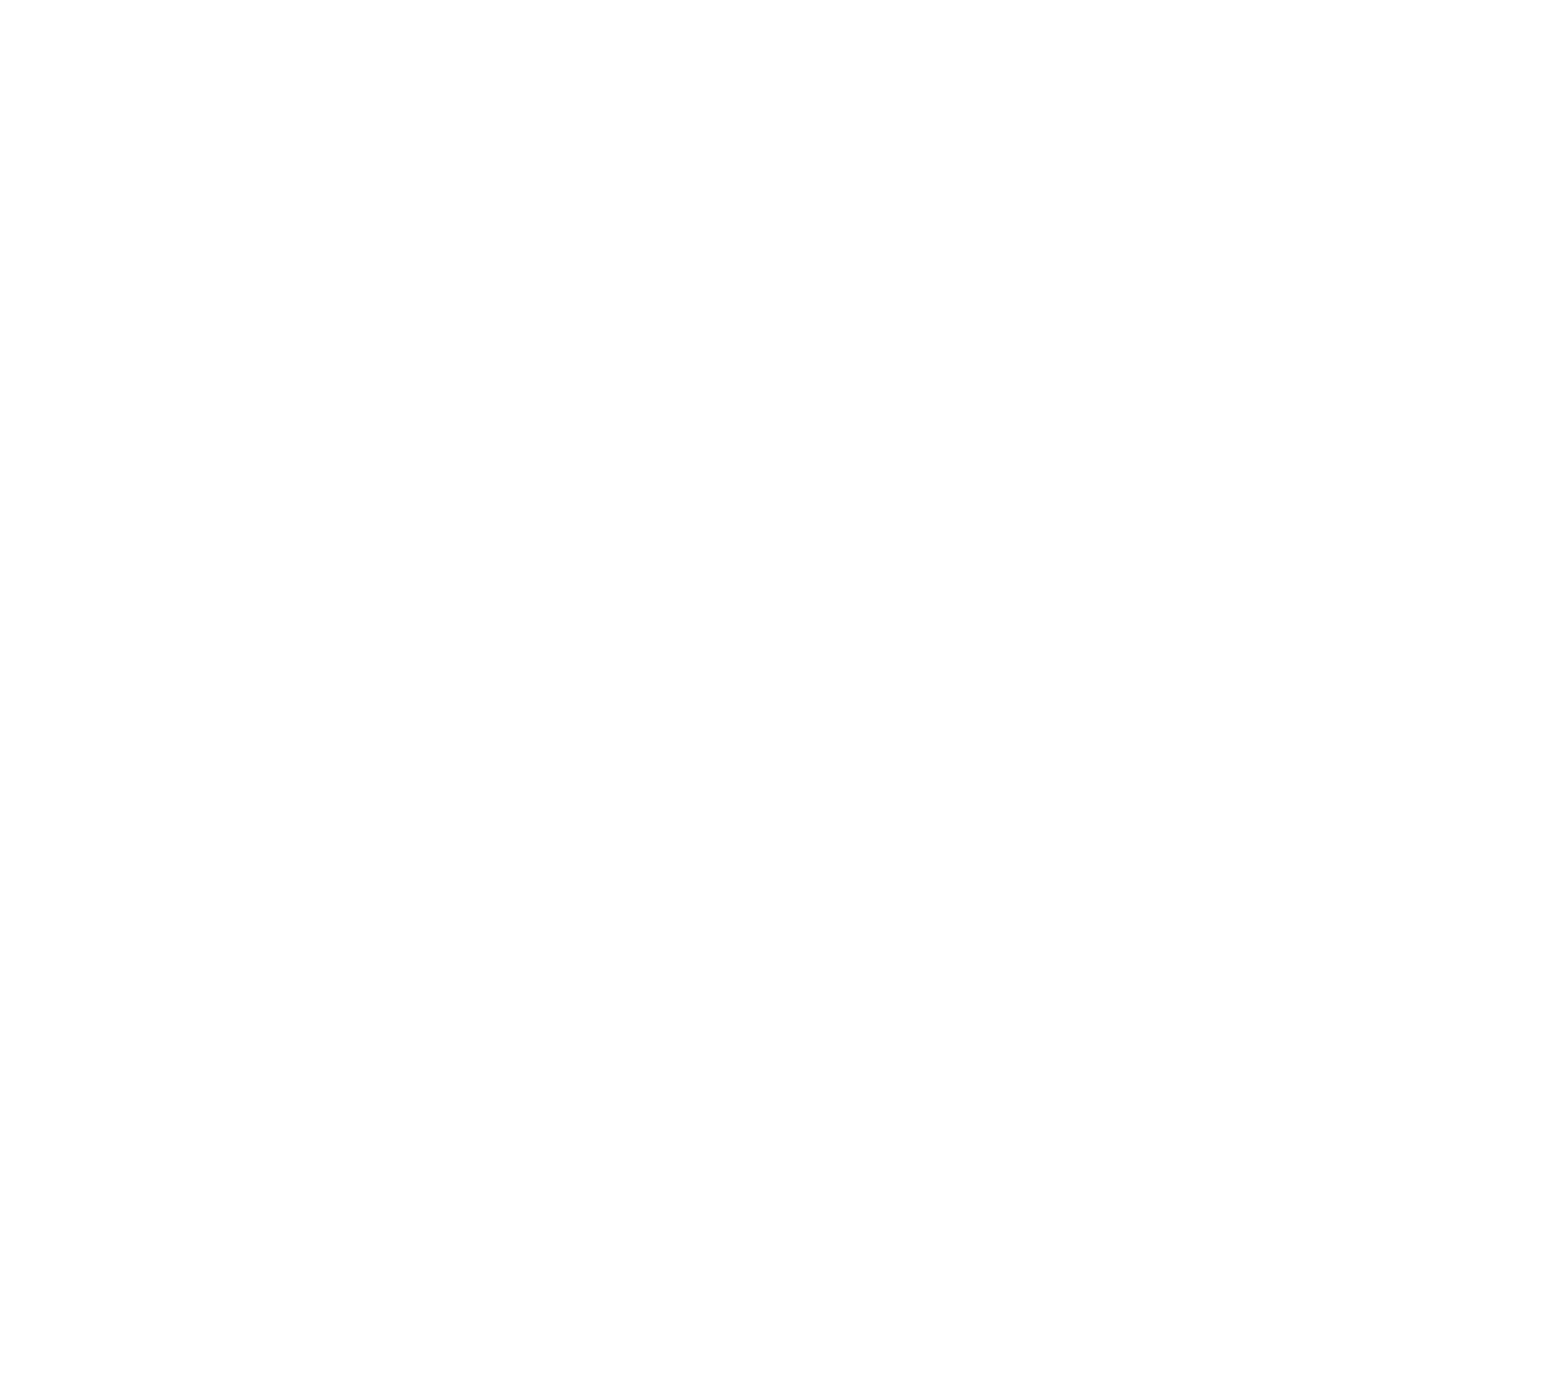 Dril-Quip logo large for dark backgrounds (transparent PNG)